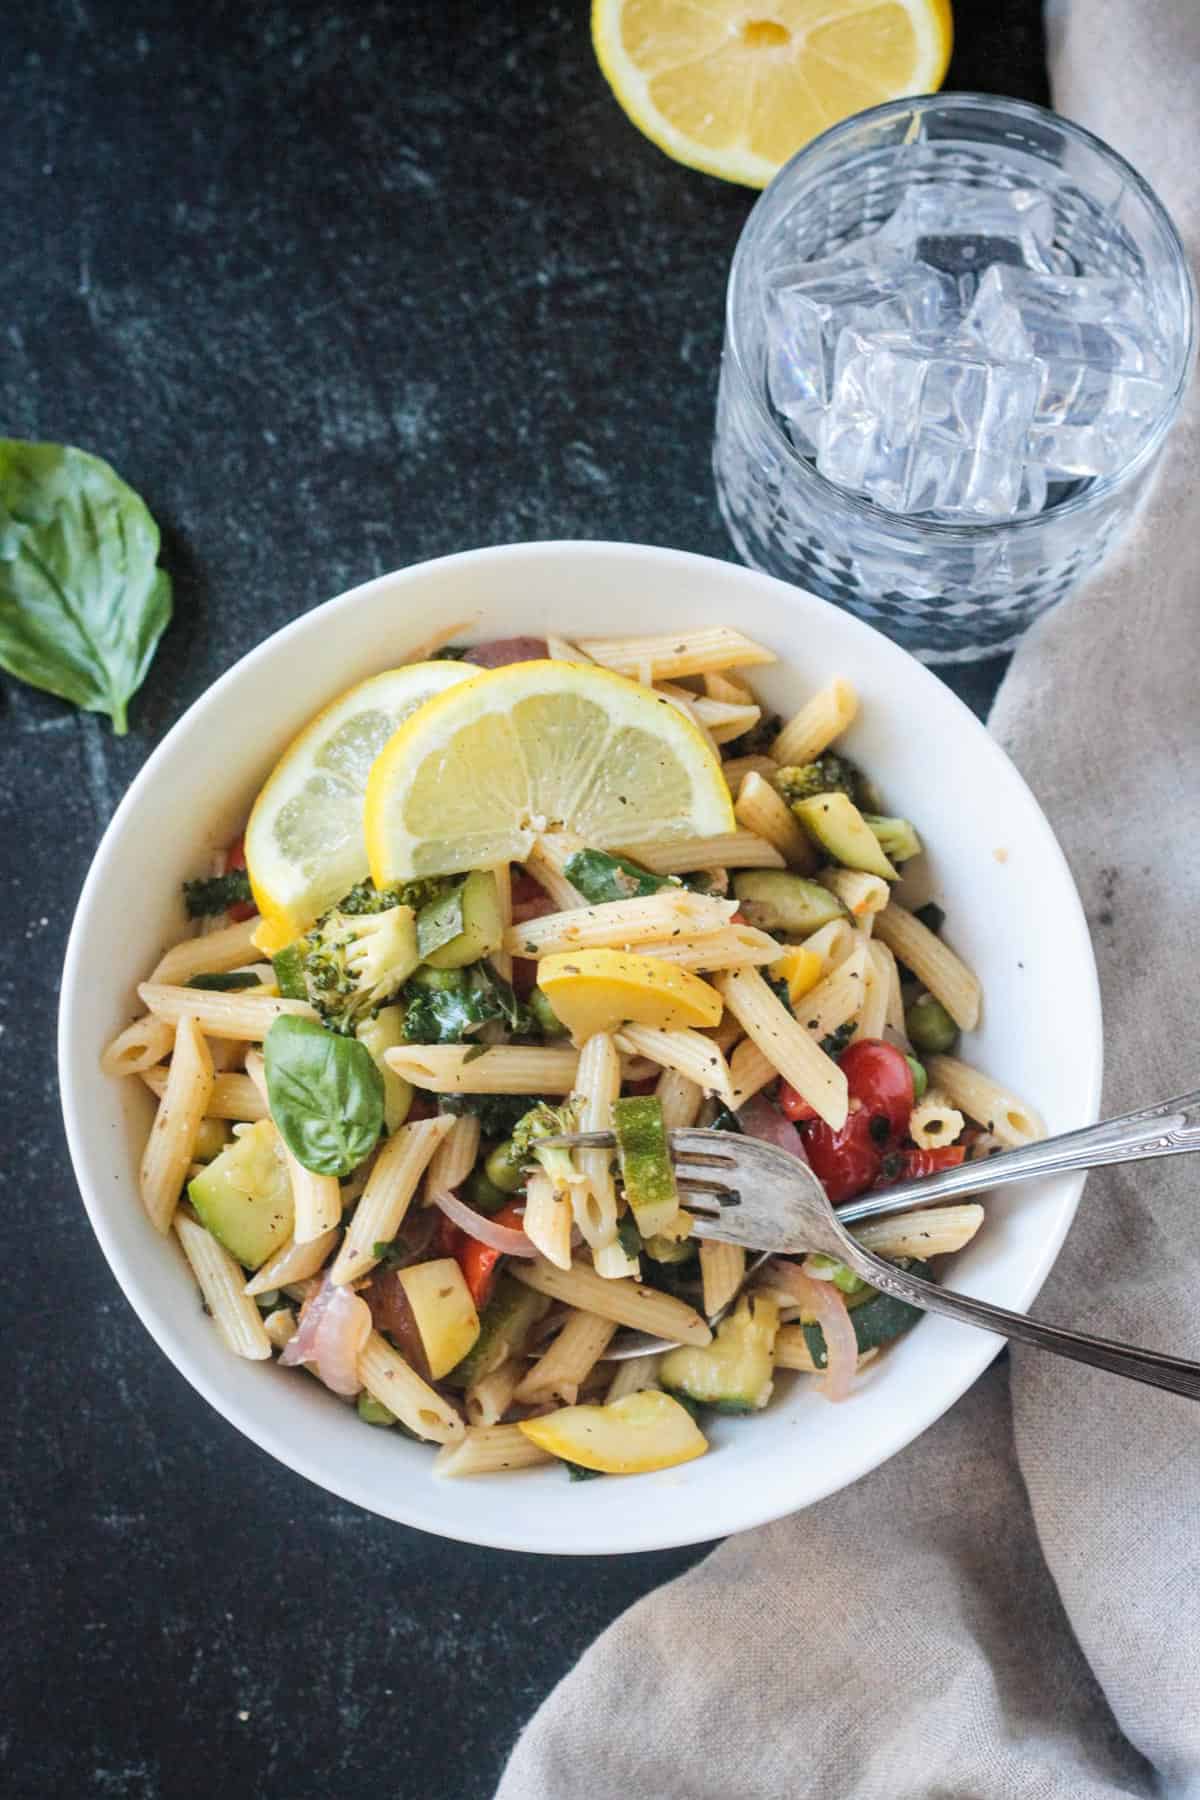 Bite of pasta primavera on a fork in a bowl.